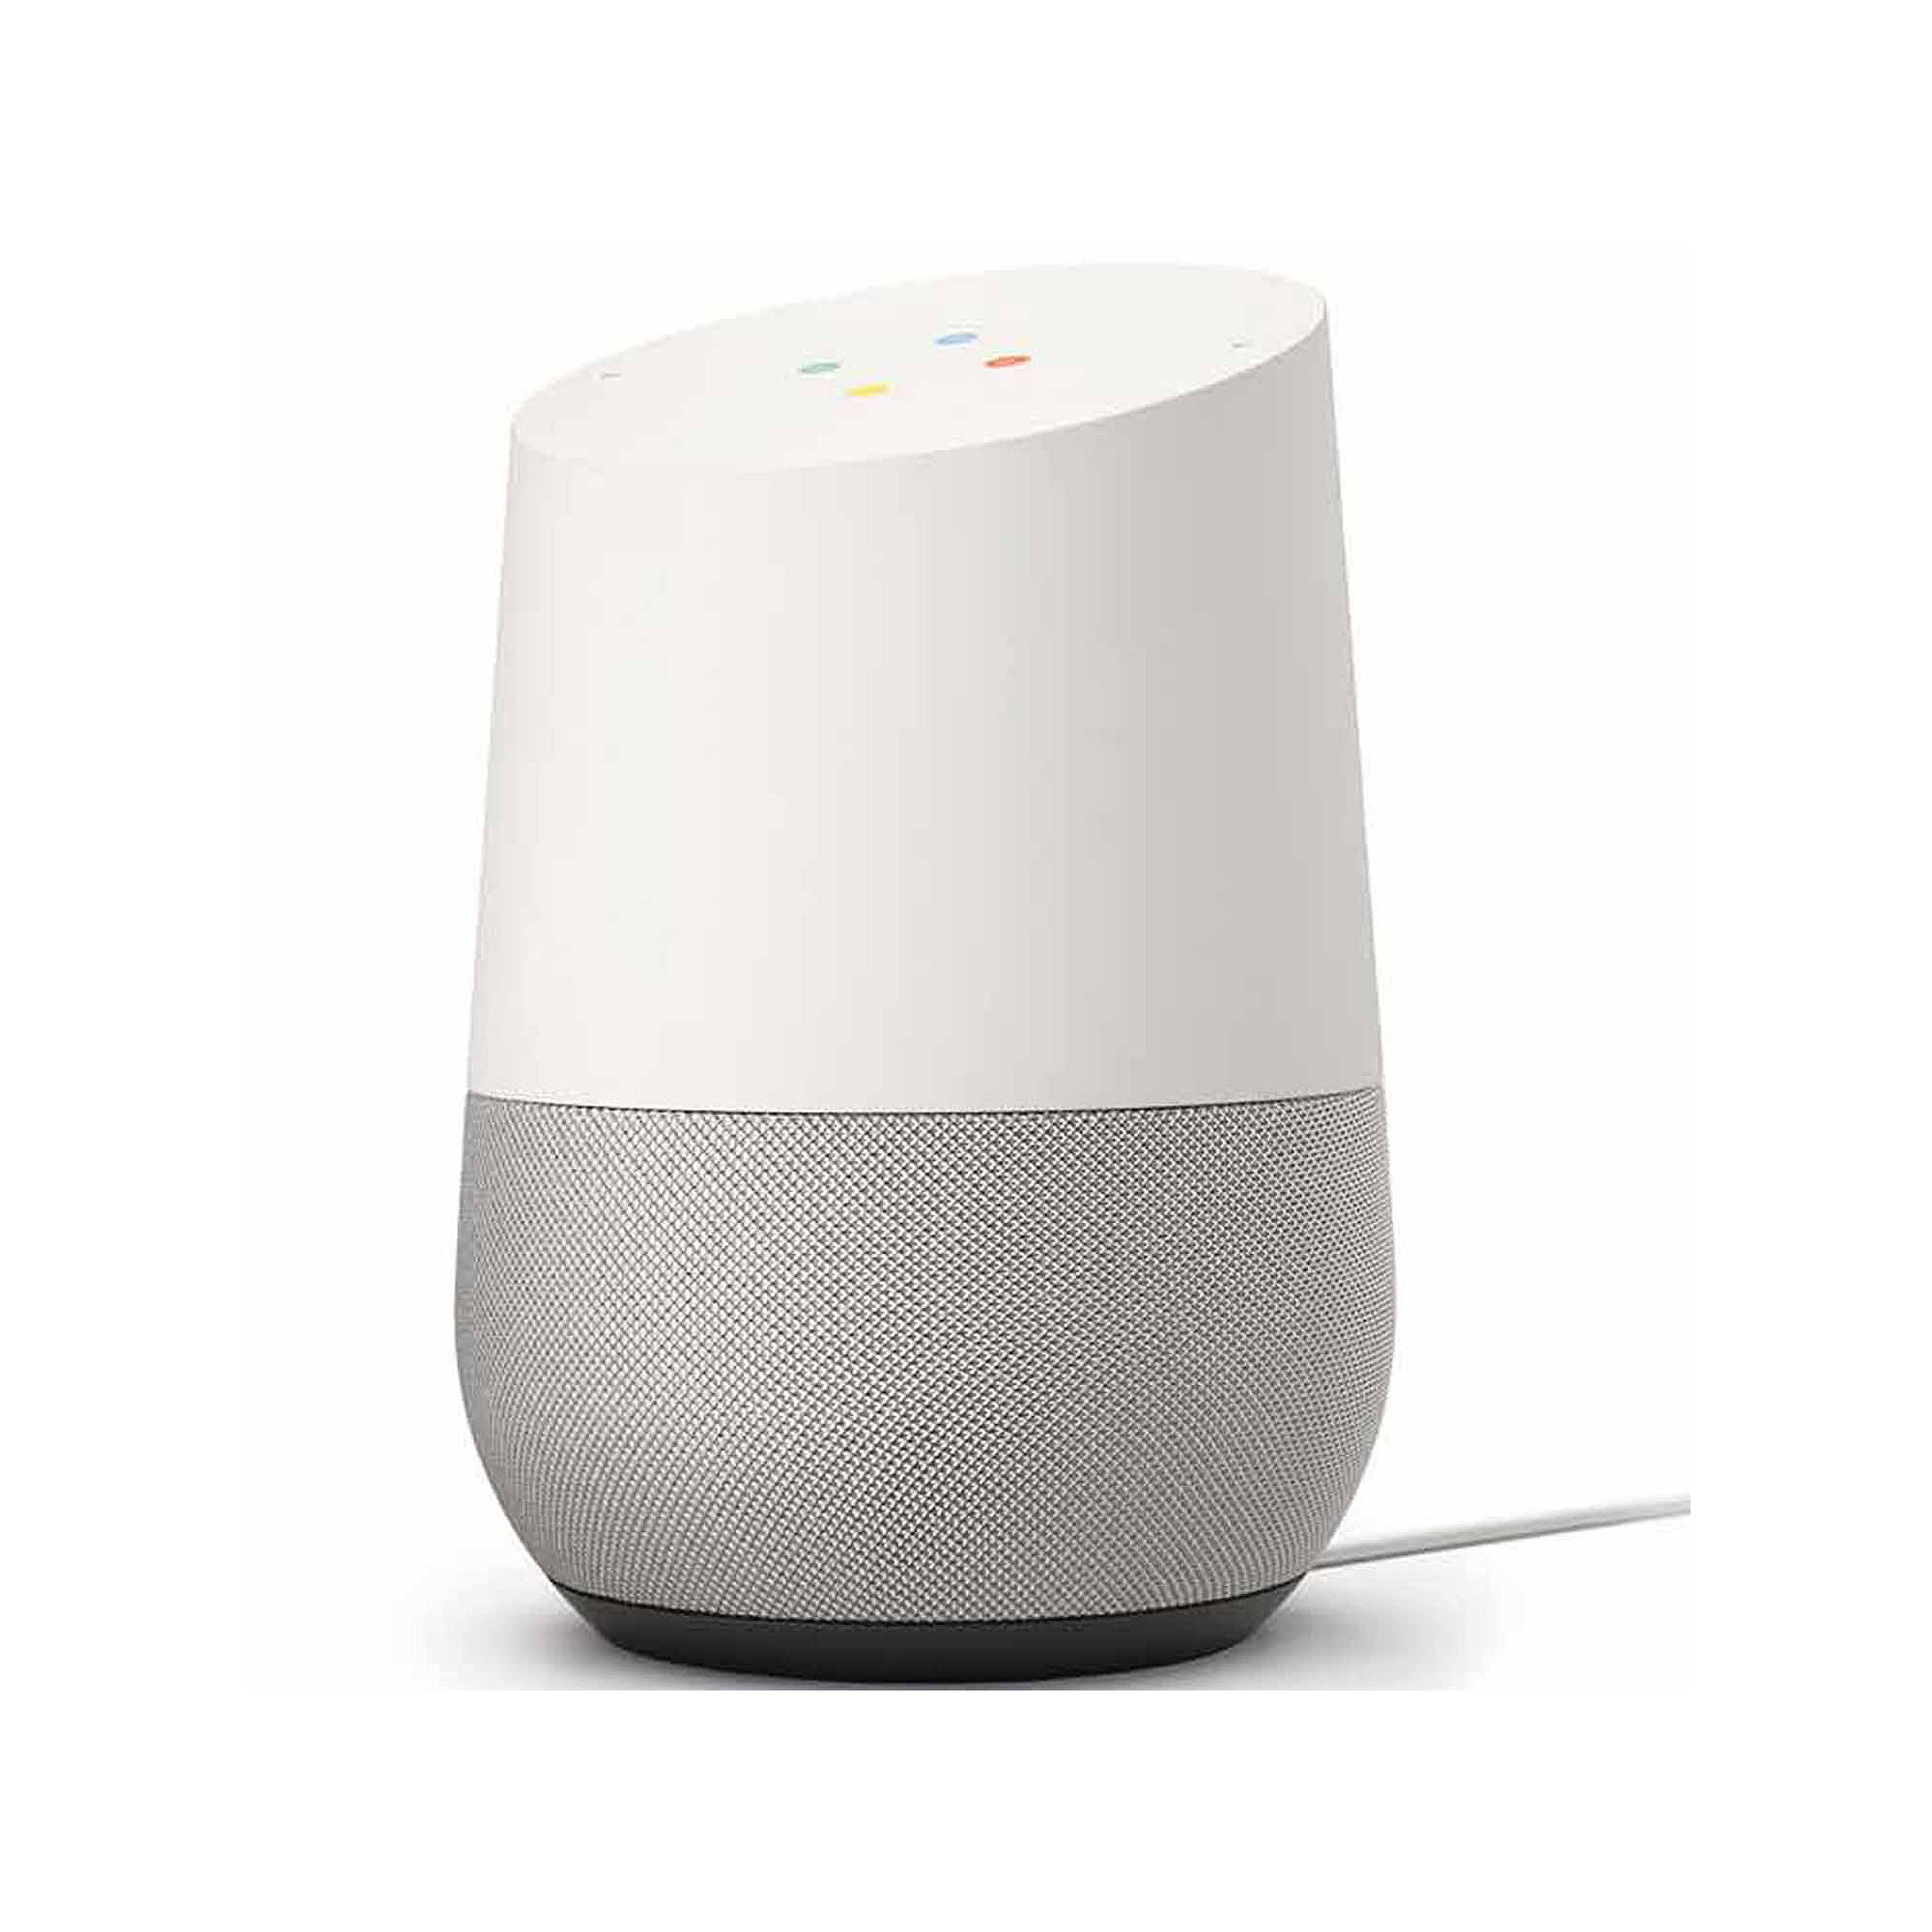 Google Home - Smart Speaker & Google Assistant, Light Grey & White - image 7 of 8